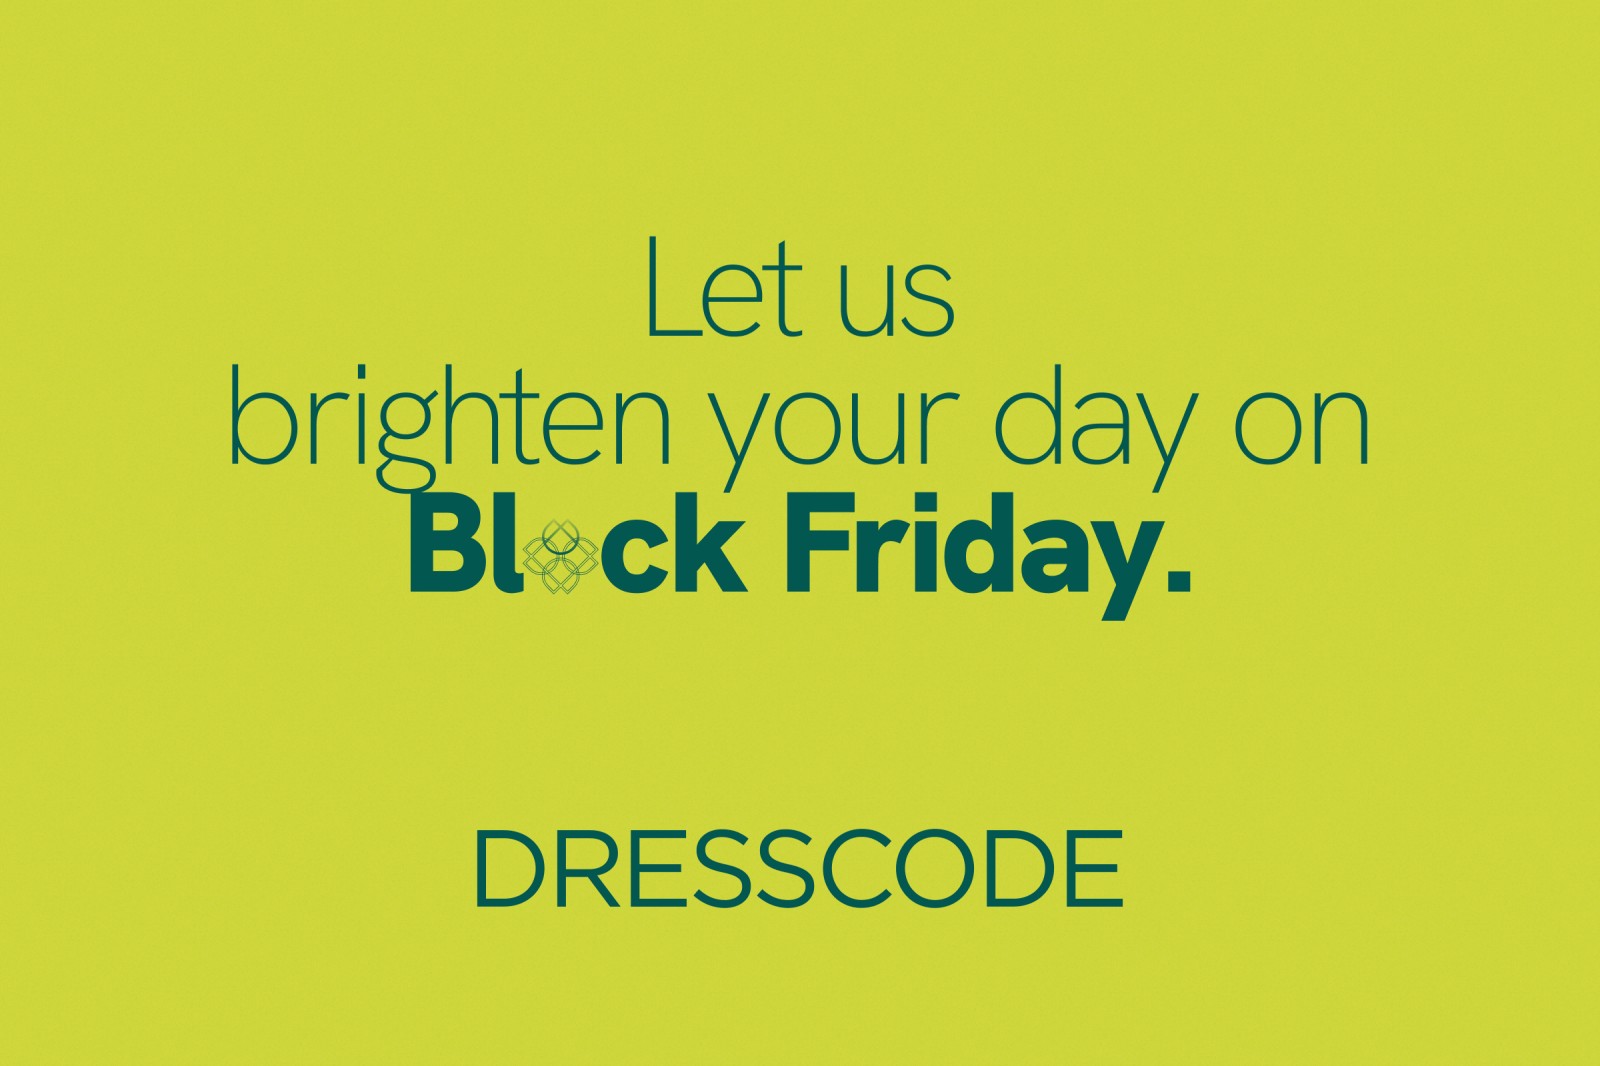 Dresscode black friday